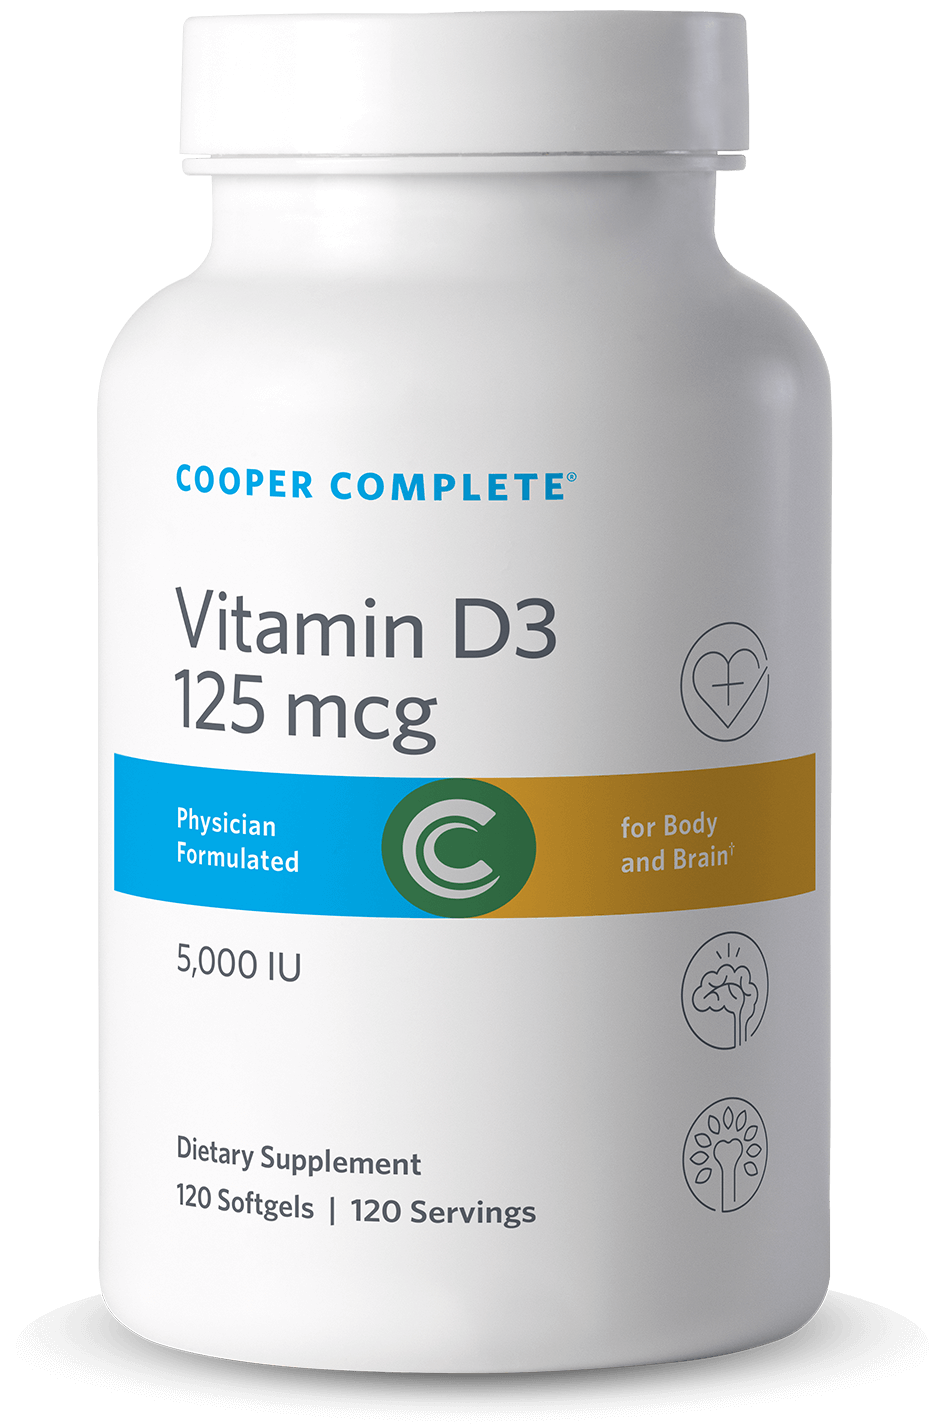 Photo of Cooper Complete Vitamin D3 125 mcg (5000 IU) Supplement bottle